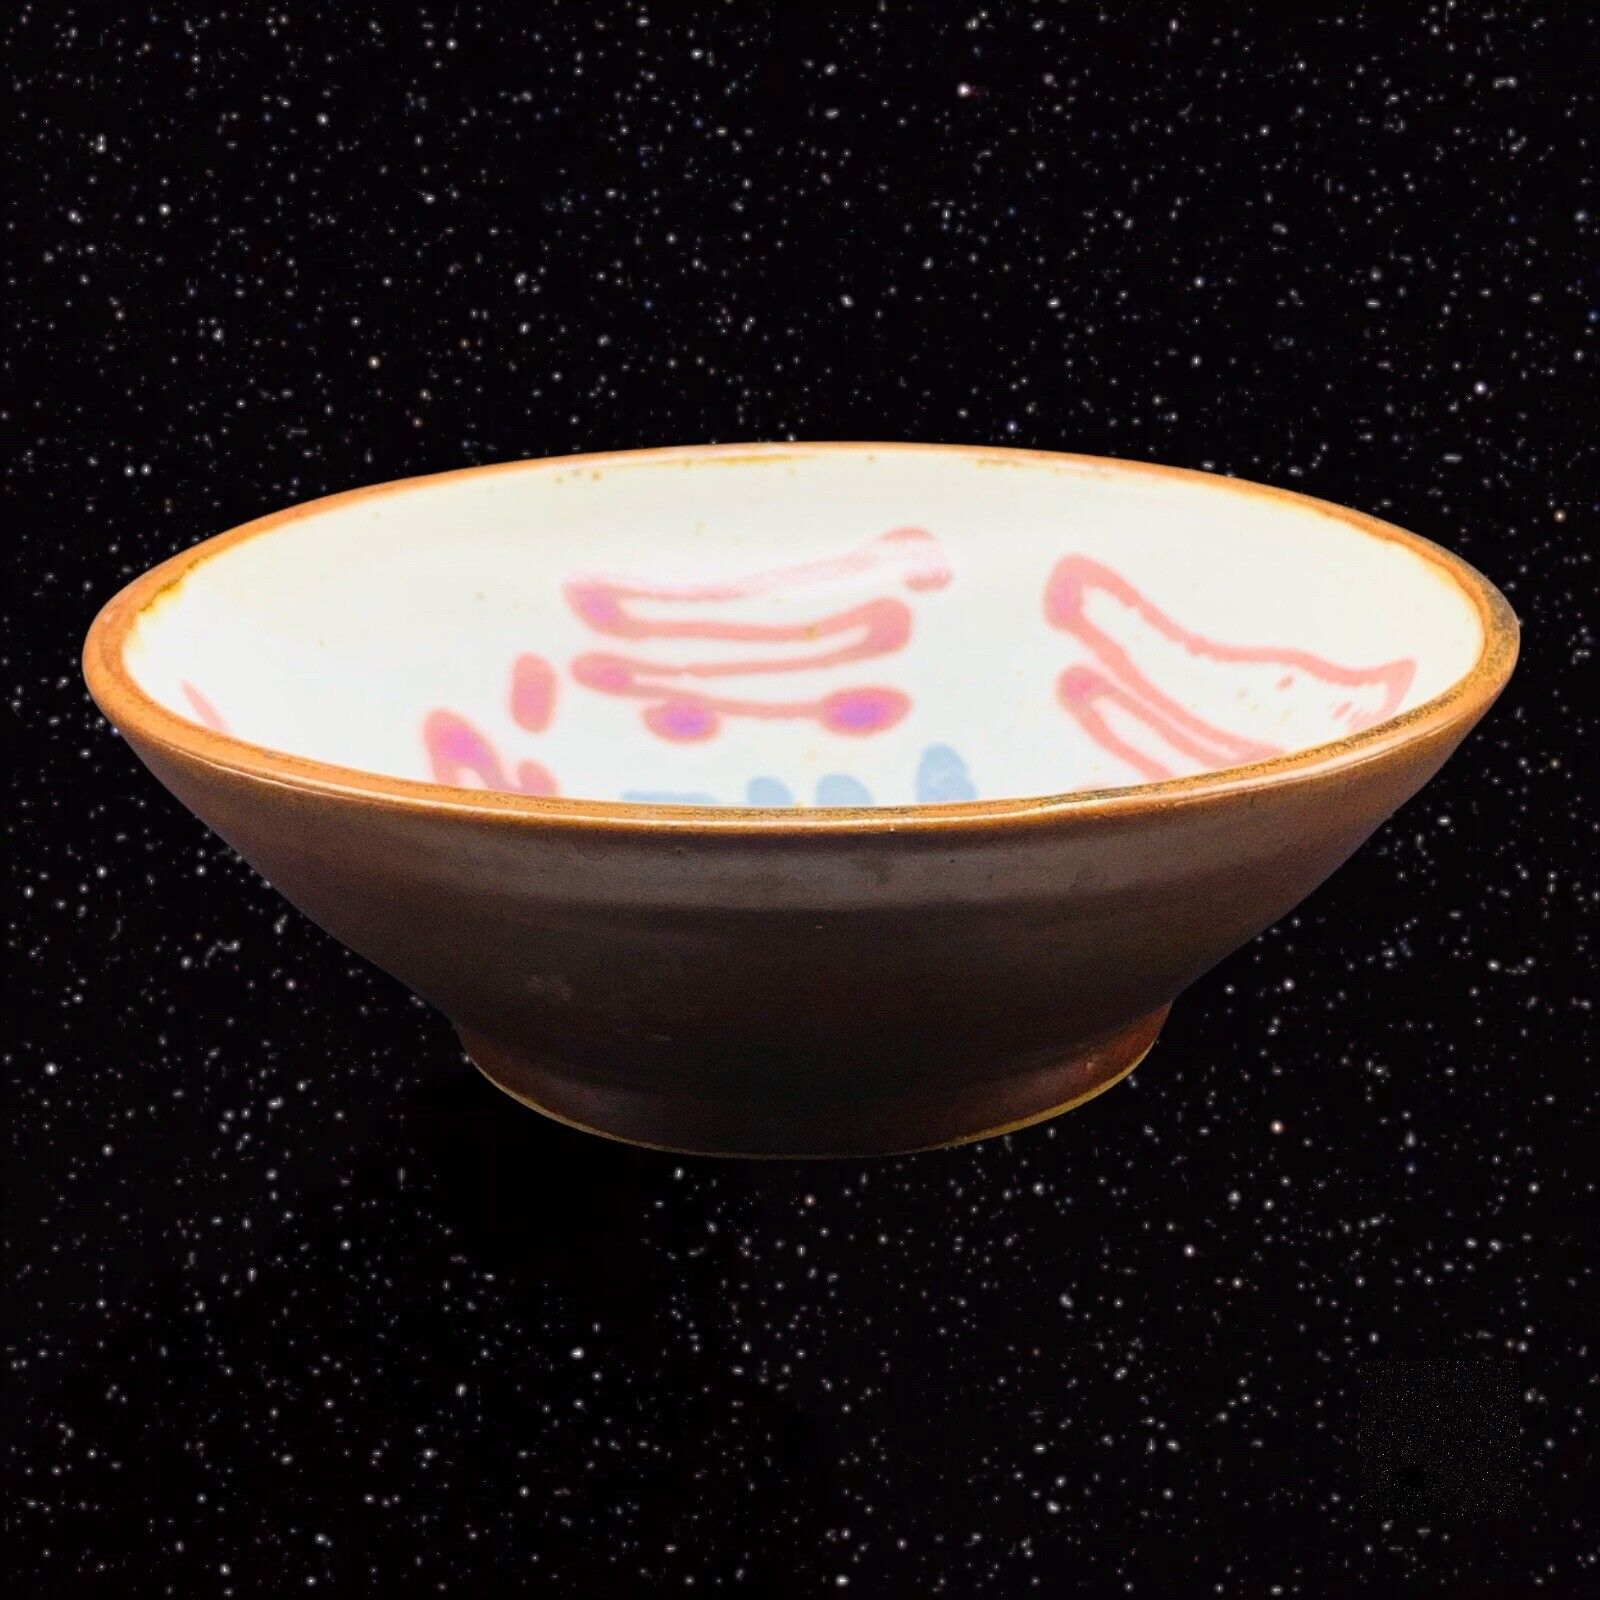 Vintage Studio Art Pottery Serving Bowl Signed Debbie C 1990 2.75”T 8”W